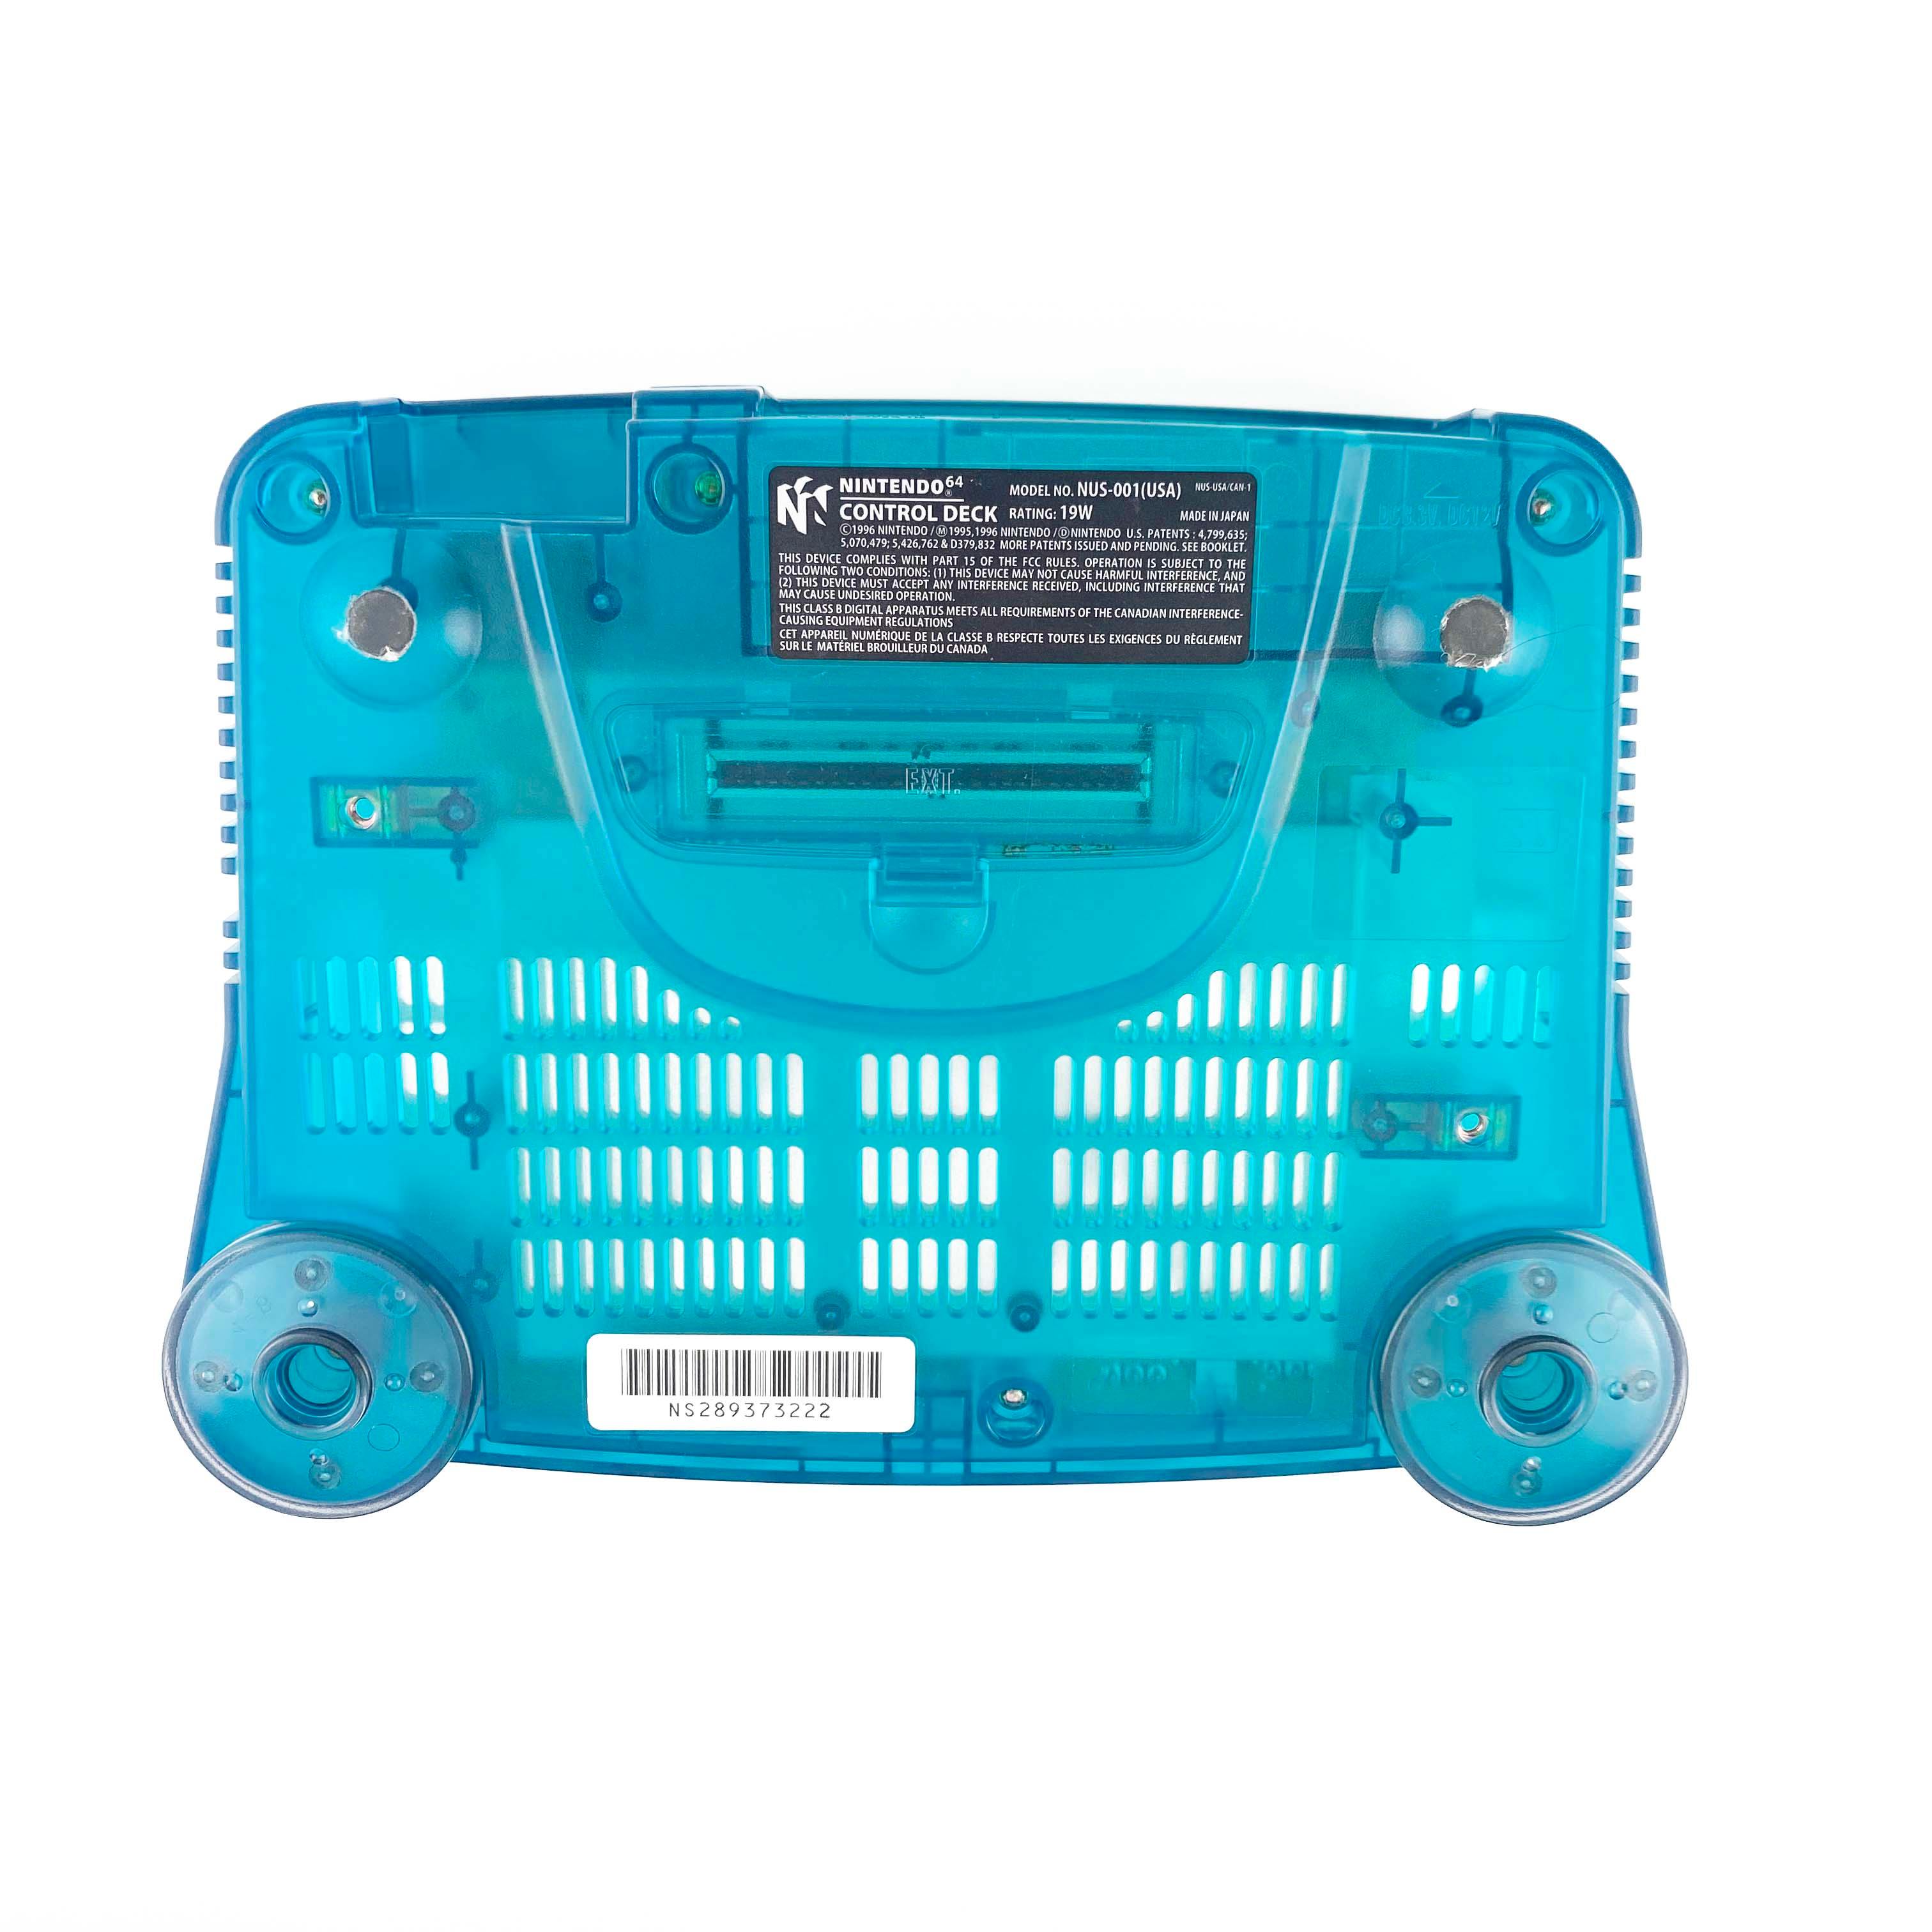 Nintendo N64 Funtastic Ice Blue Console Bundle (NUS-001)